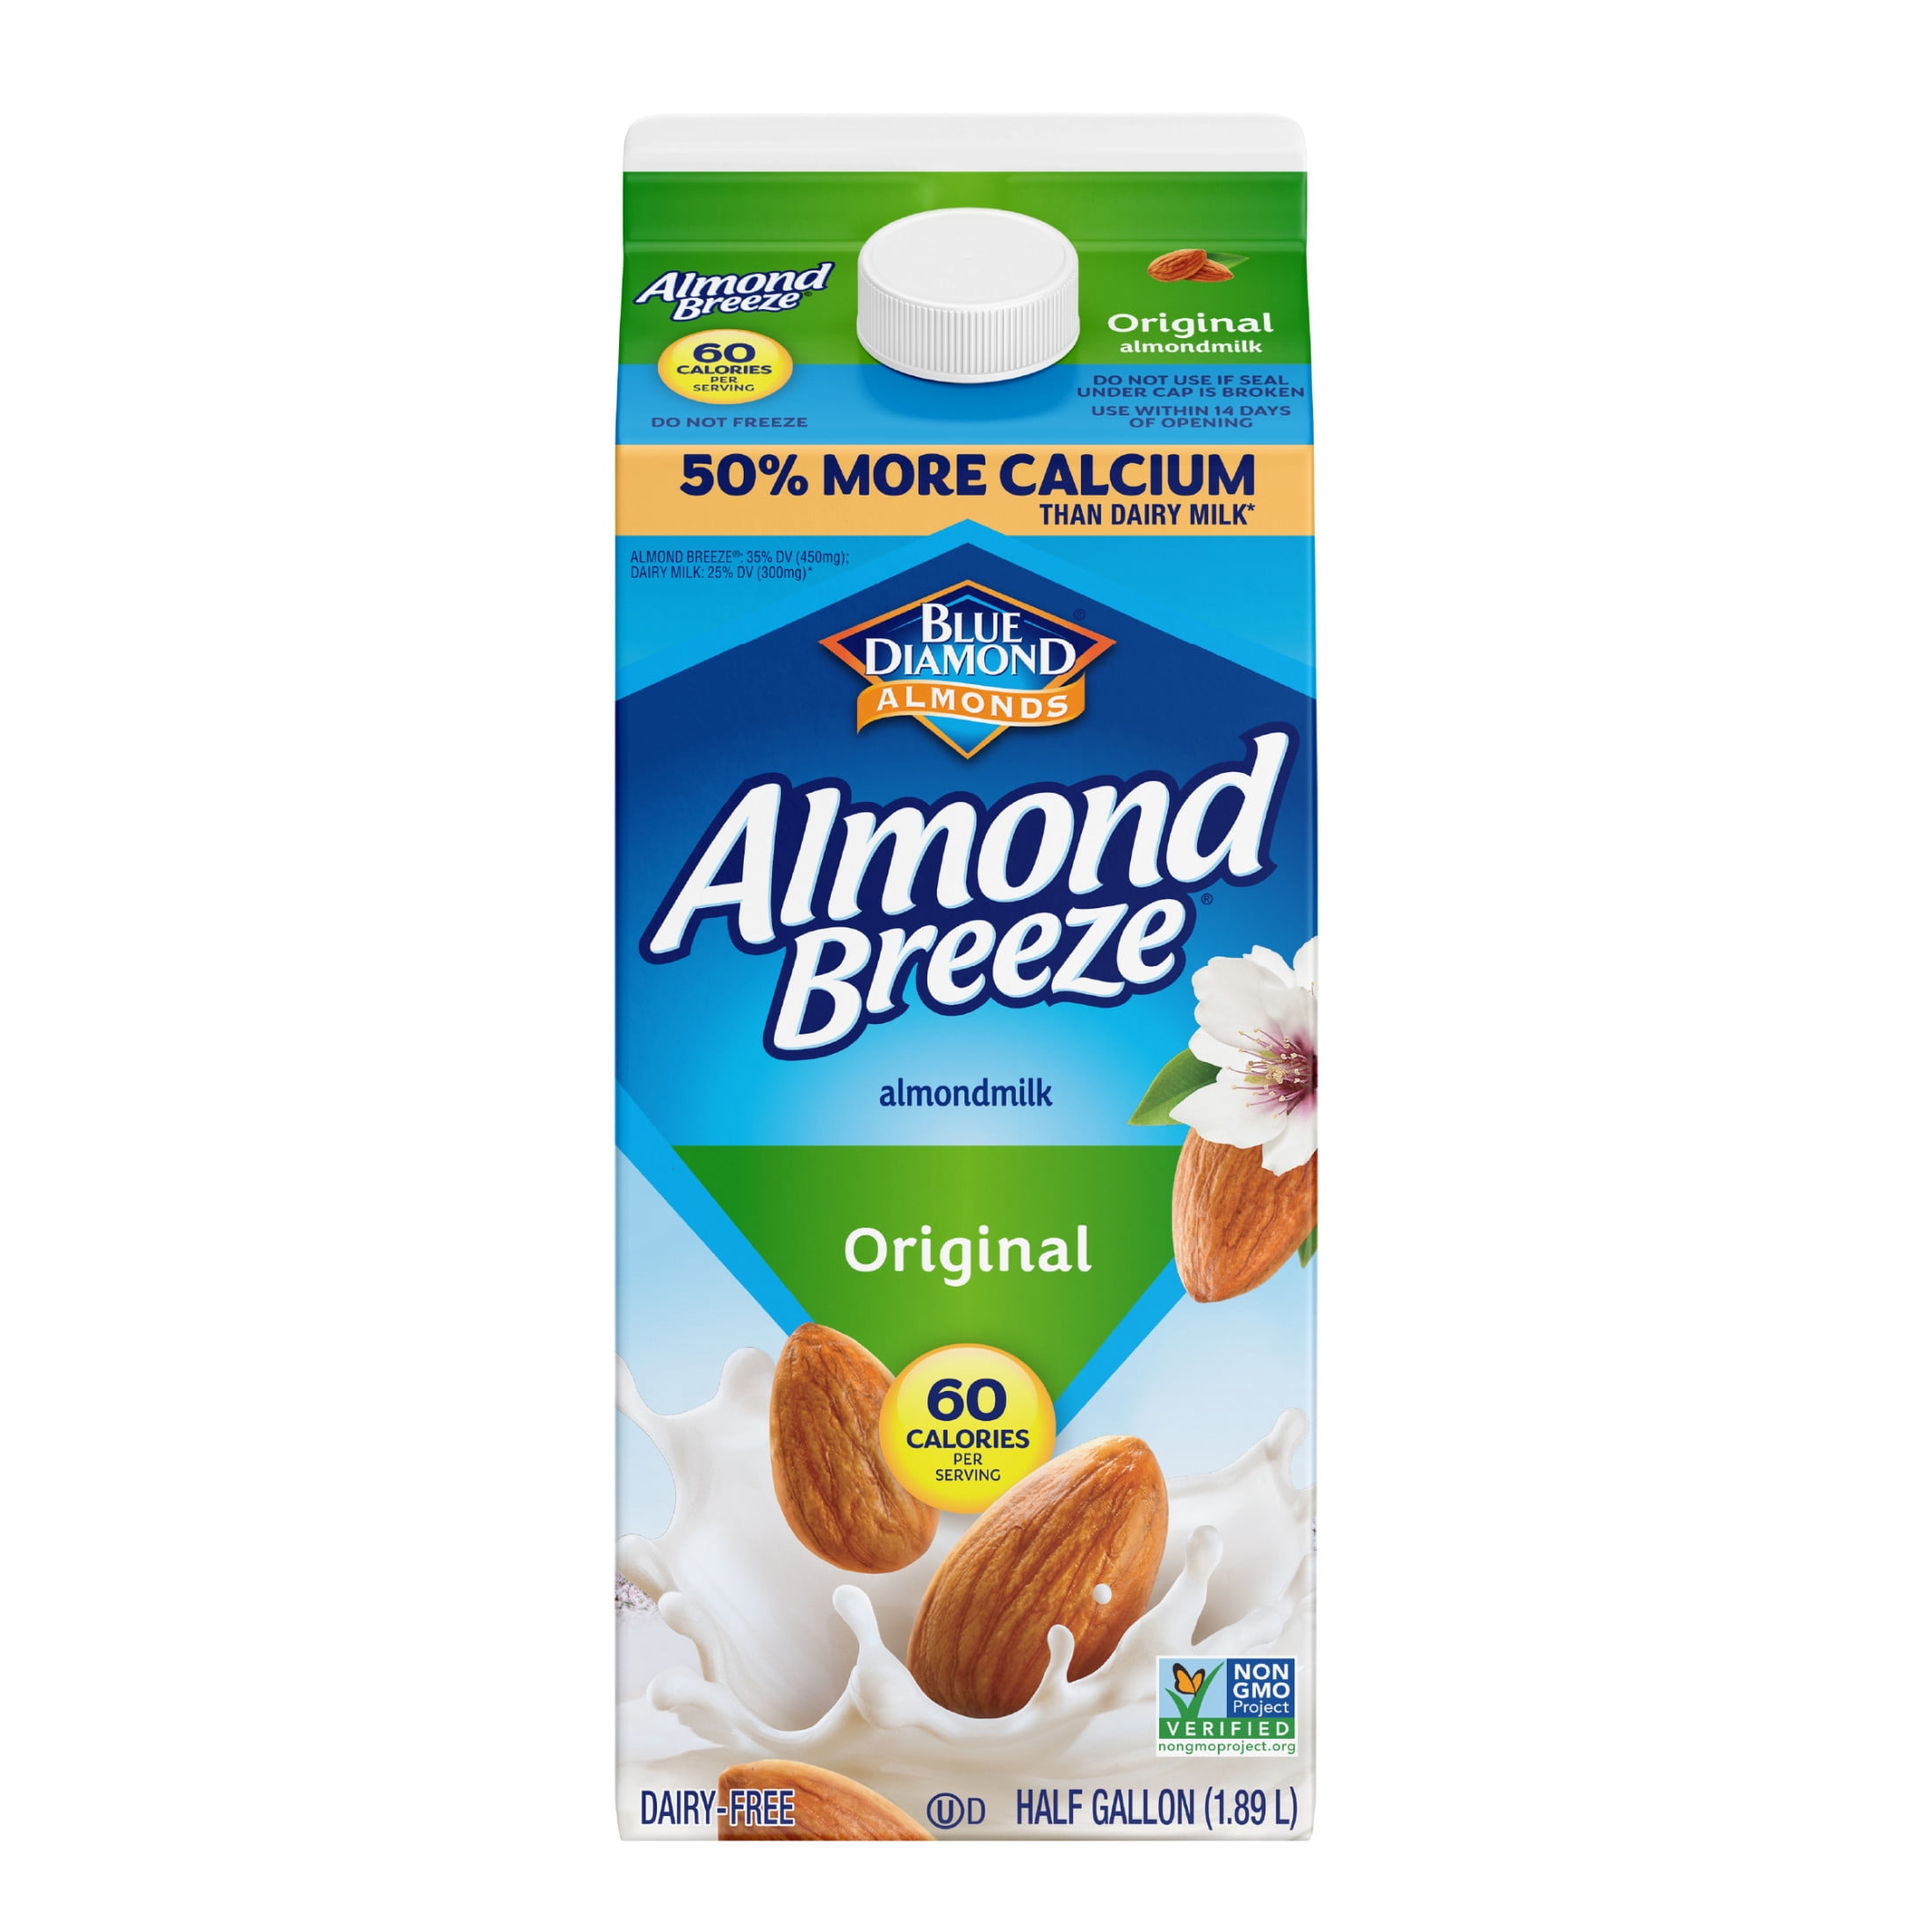 Almond Breeze Original Almondmilk, 64 oz